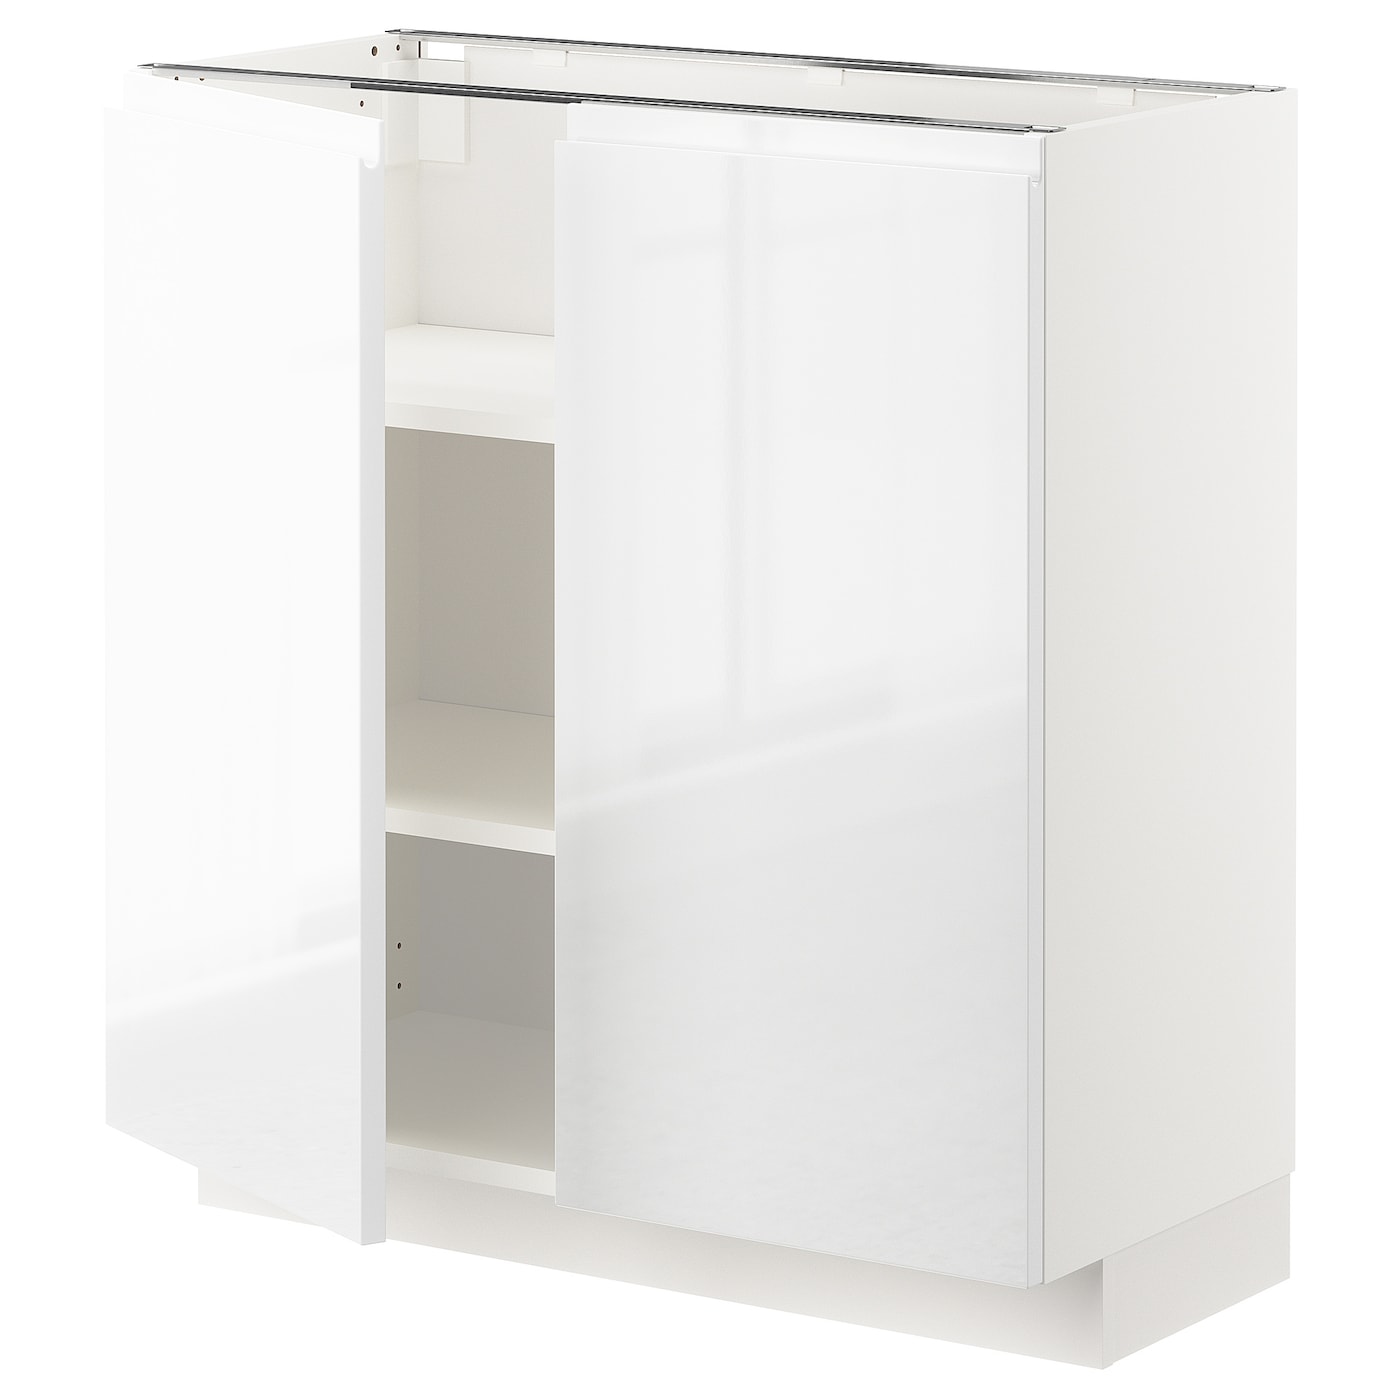 Напольный шкаф - METOD IKEA/ МЕТОД ИКЕА,  80х88 см, белый